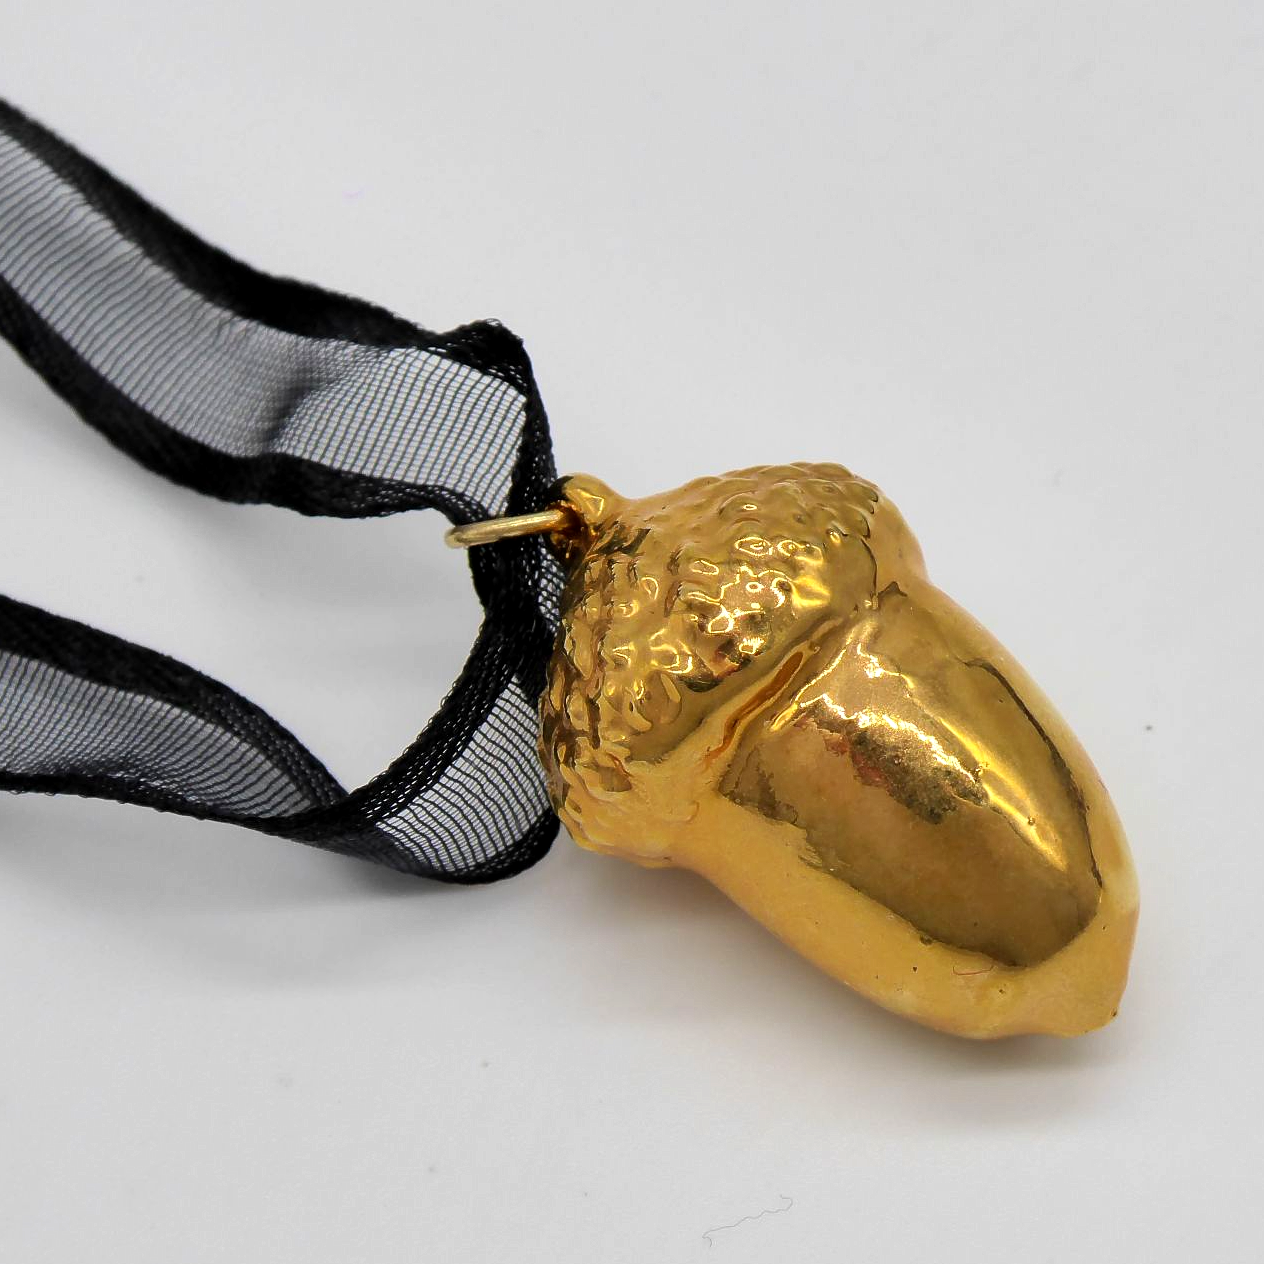 Dipped gold acorn pendant